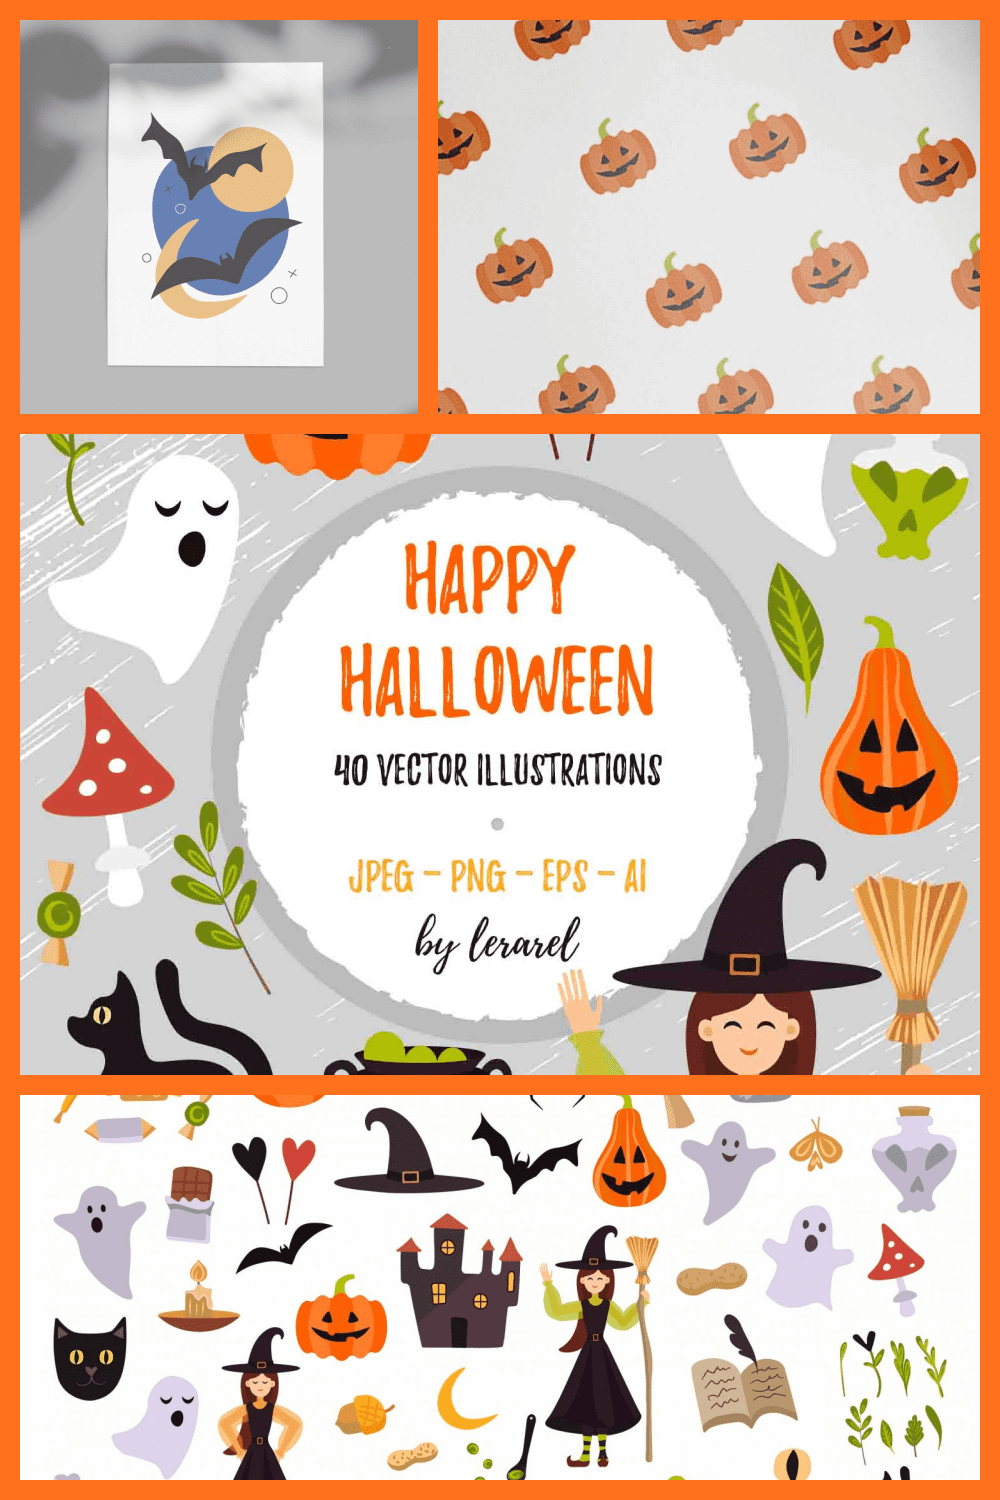 40 Happy Halloween Vector Illustrations - MasterBundles - Pinterest Collage Image.